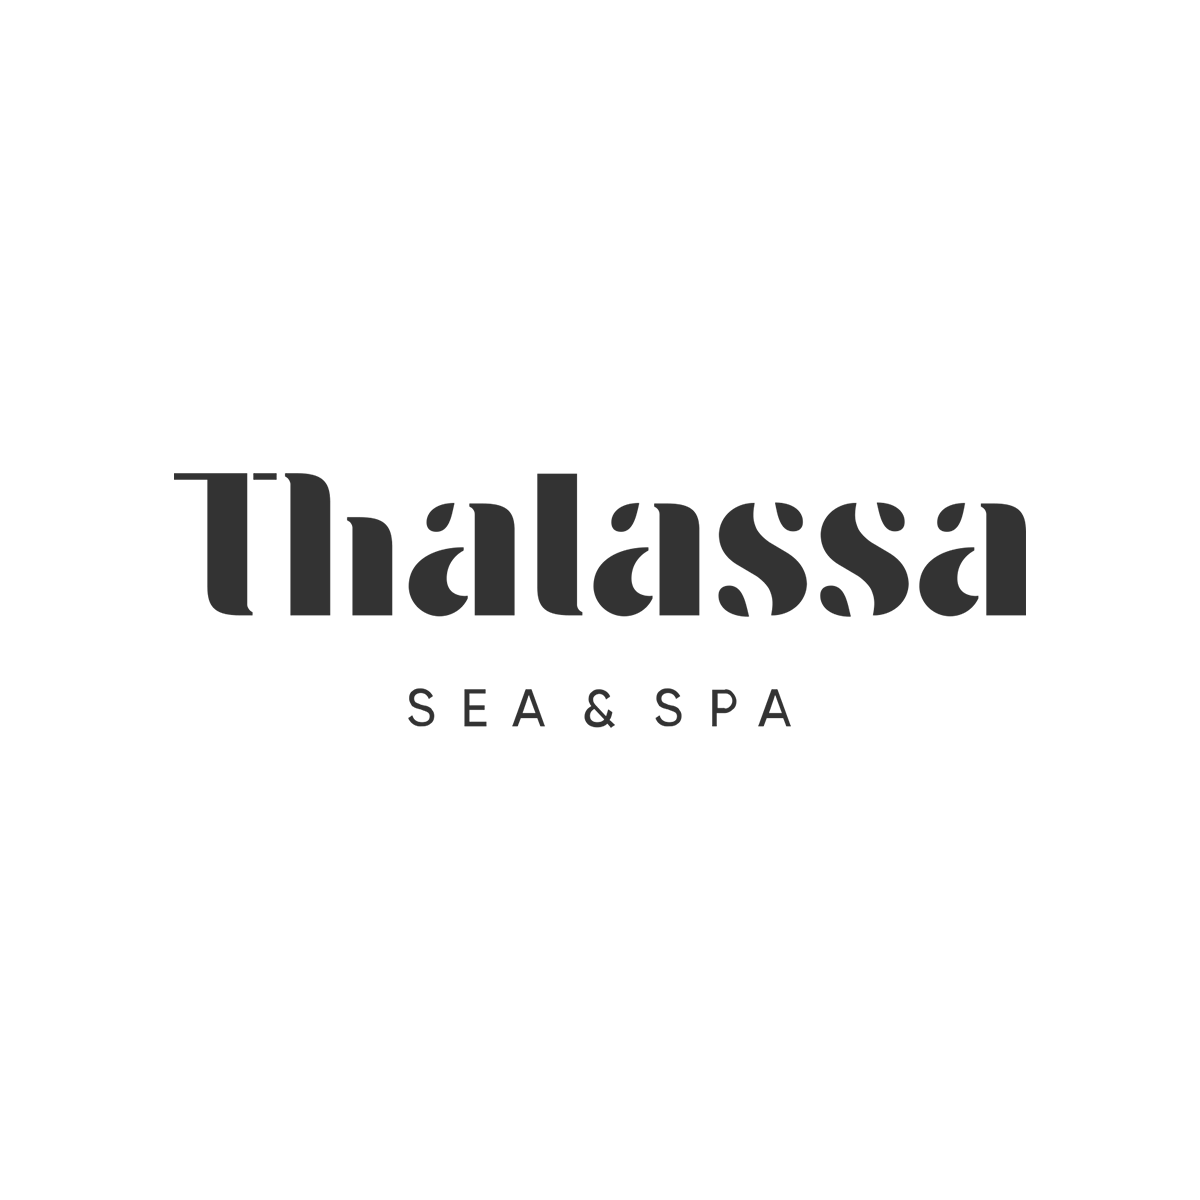 Thalassa Sea & Spa